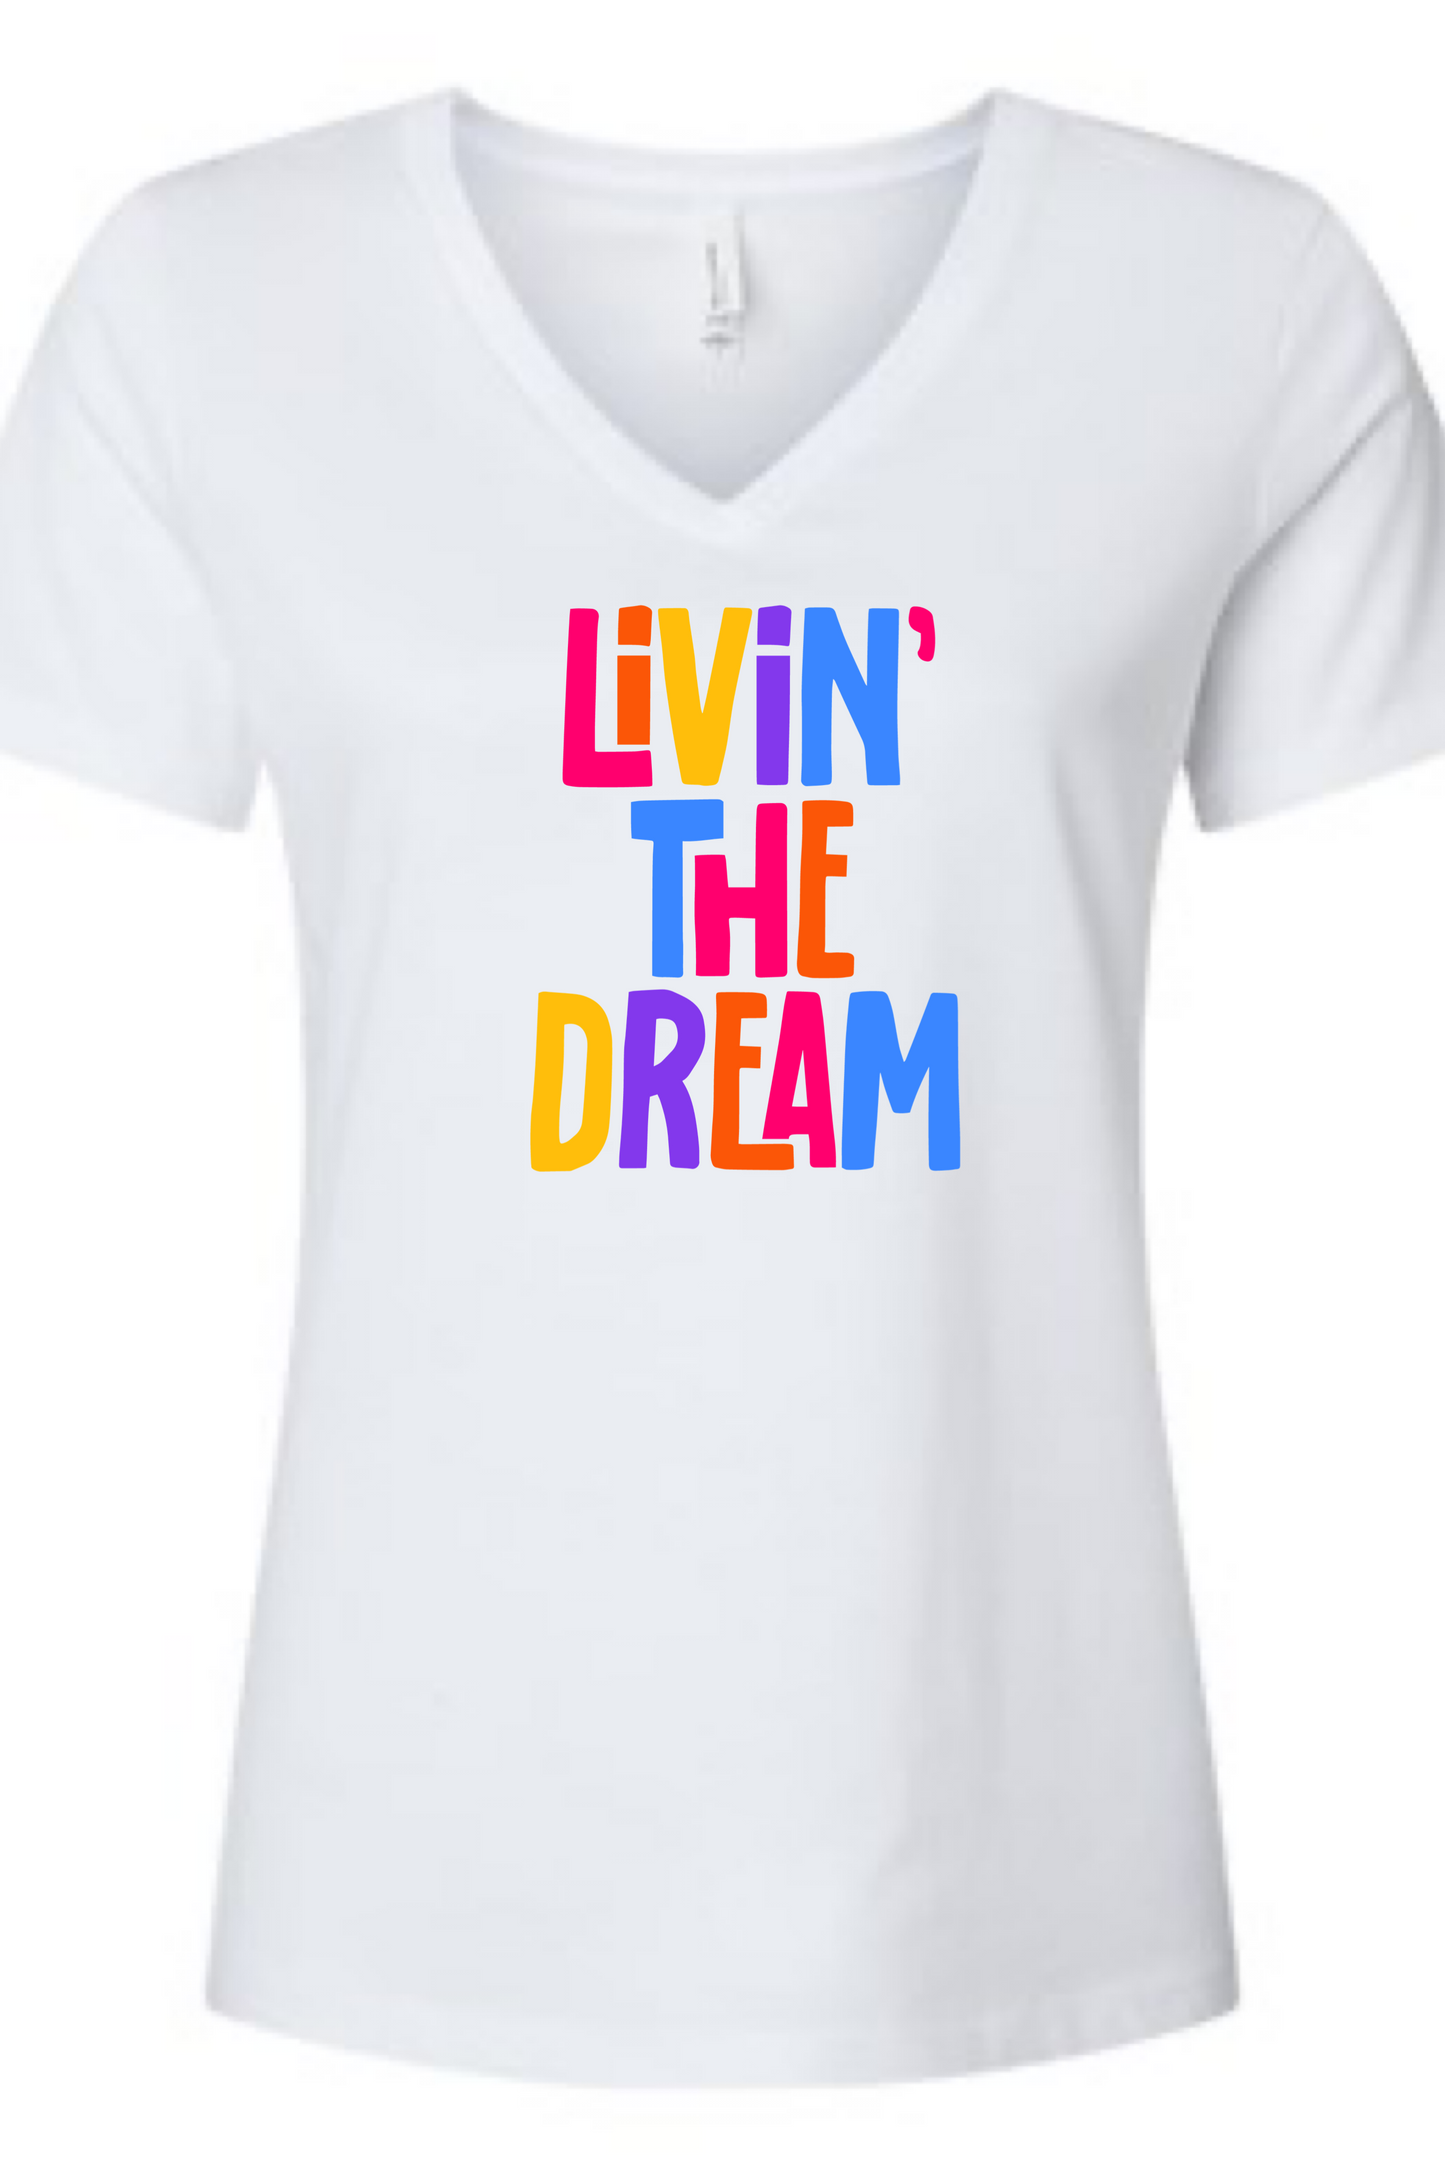 Livin" The Dream Tri- Blend V-Neck T-Shirt